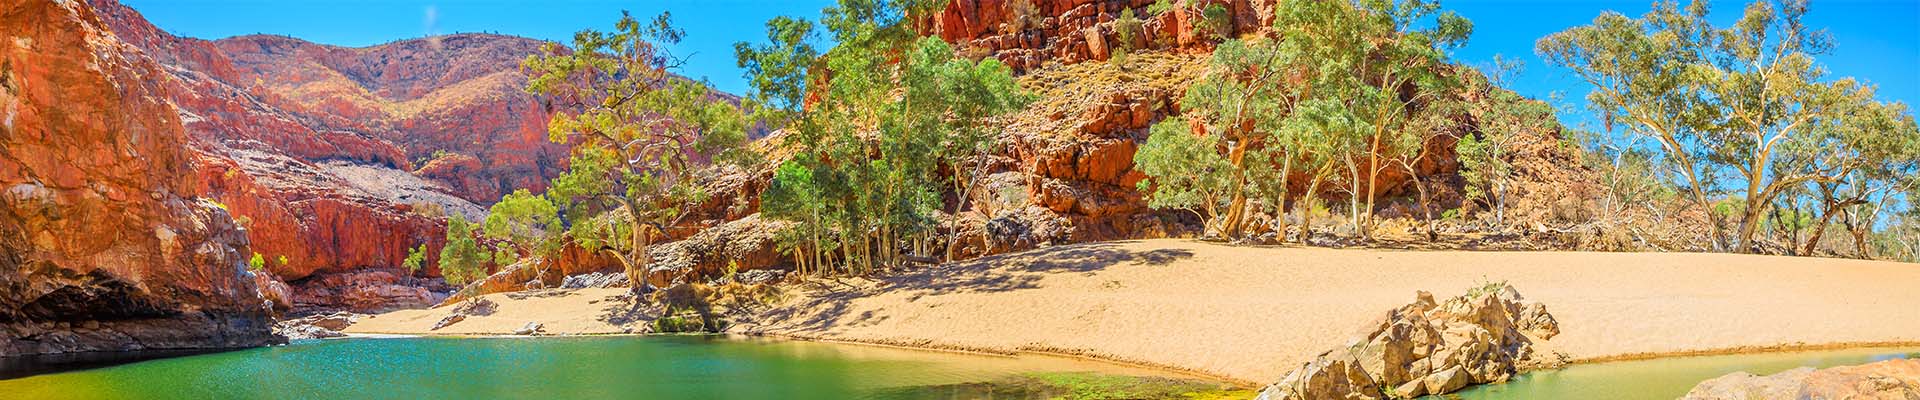 Northern Territory water hole Australia